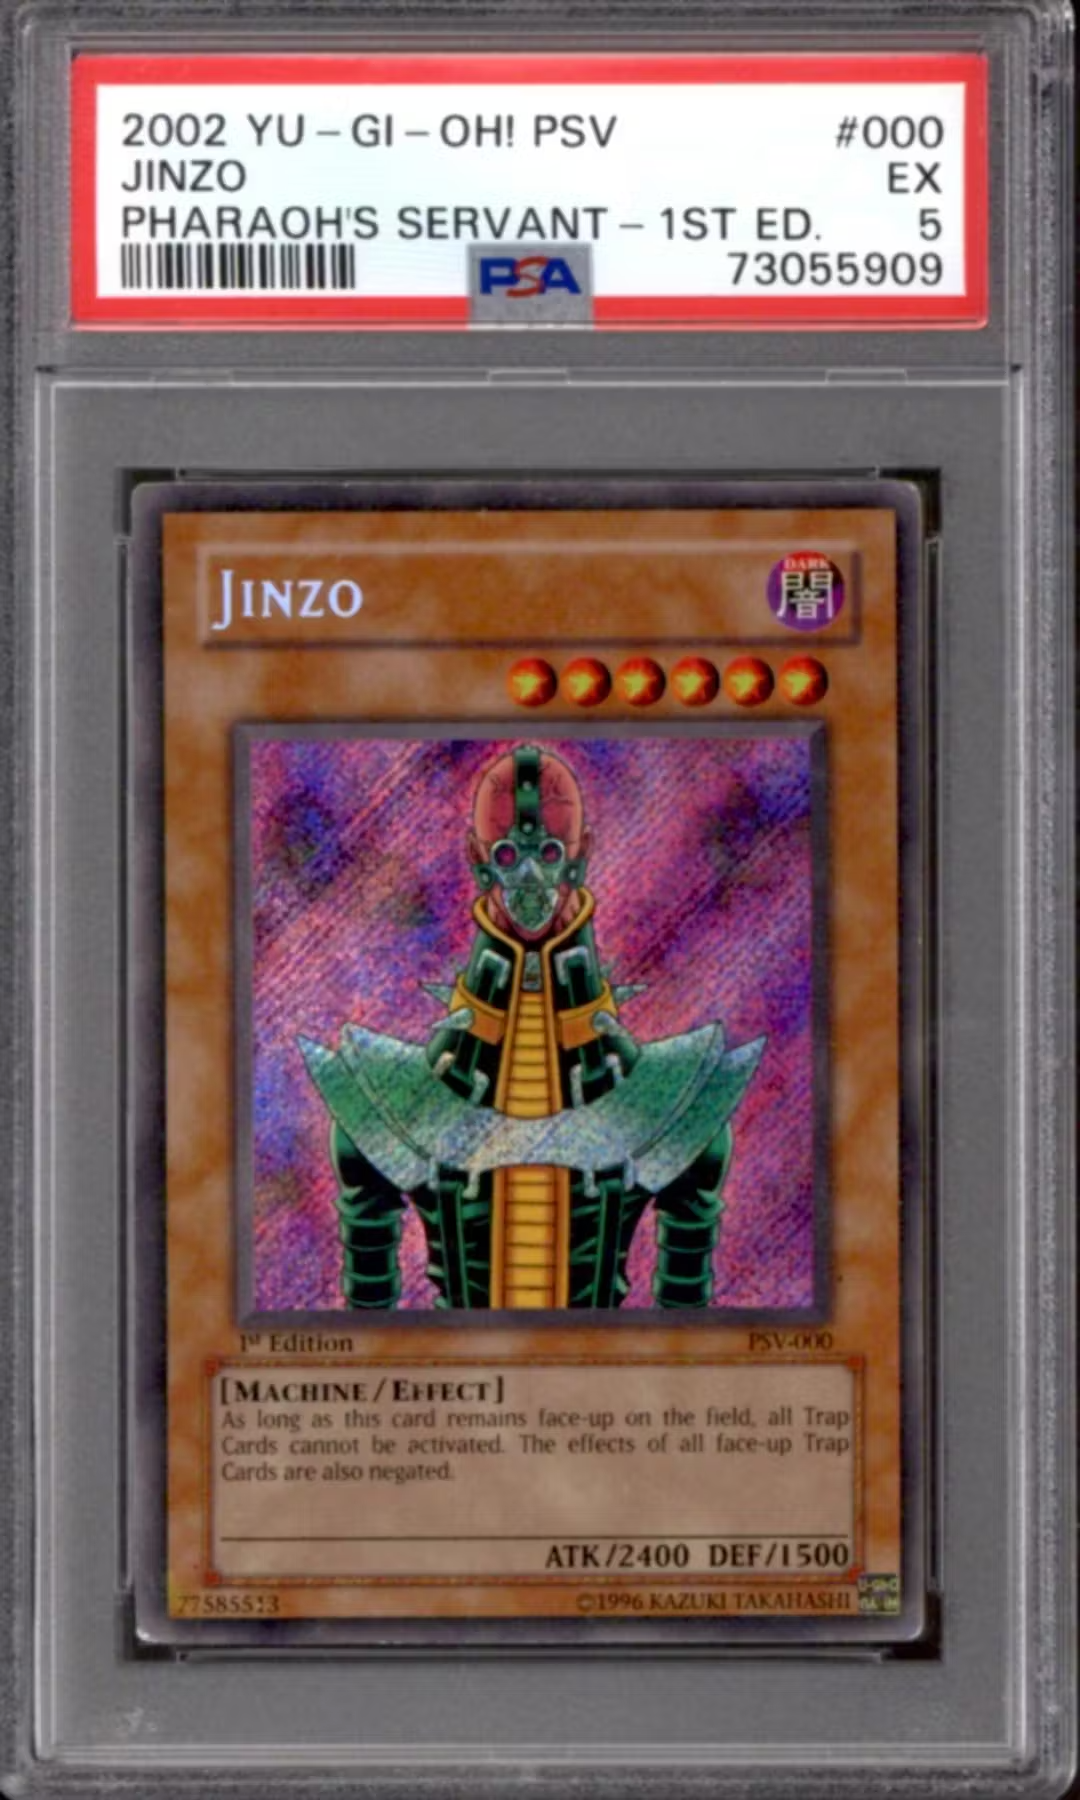 Yu-Gi-Oh Pharaoh's Servant 1st Edition Jinzo PSV-000 PSA 5